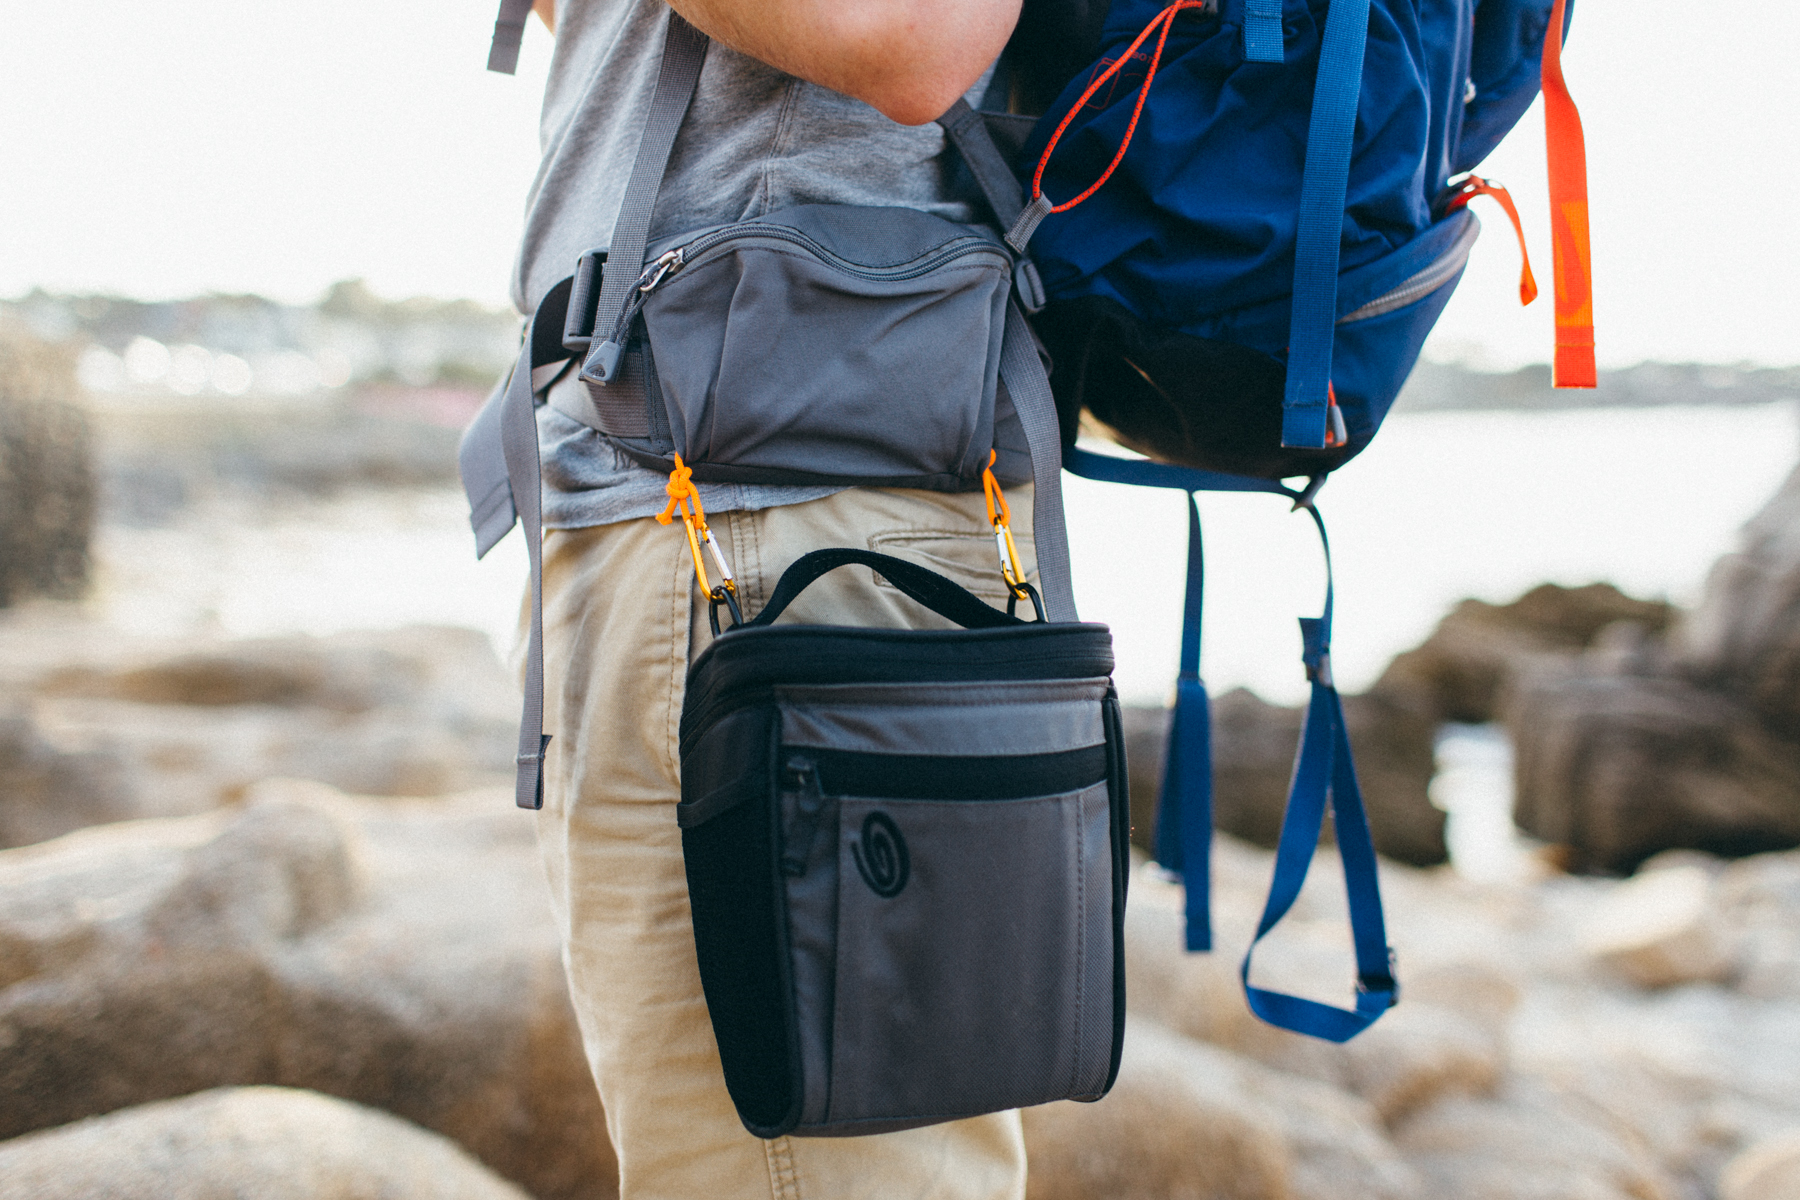 Signification du backpacking : tout ce que vous devez savoir - Backpacking With DSLR 015